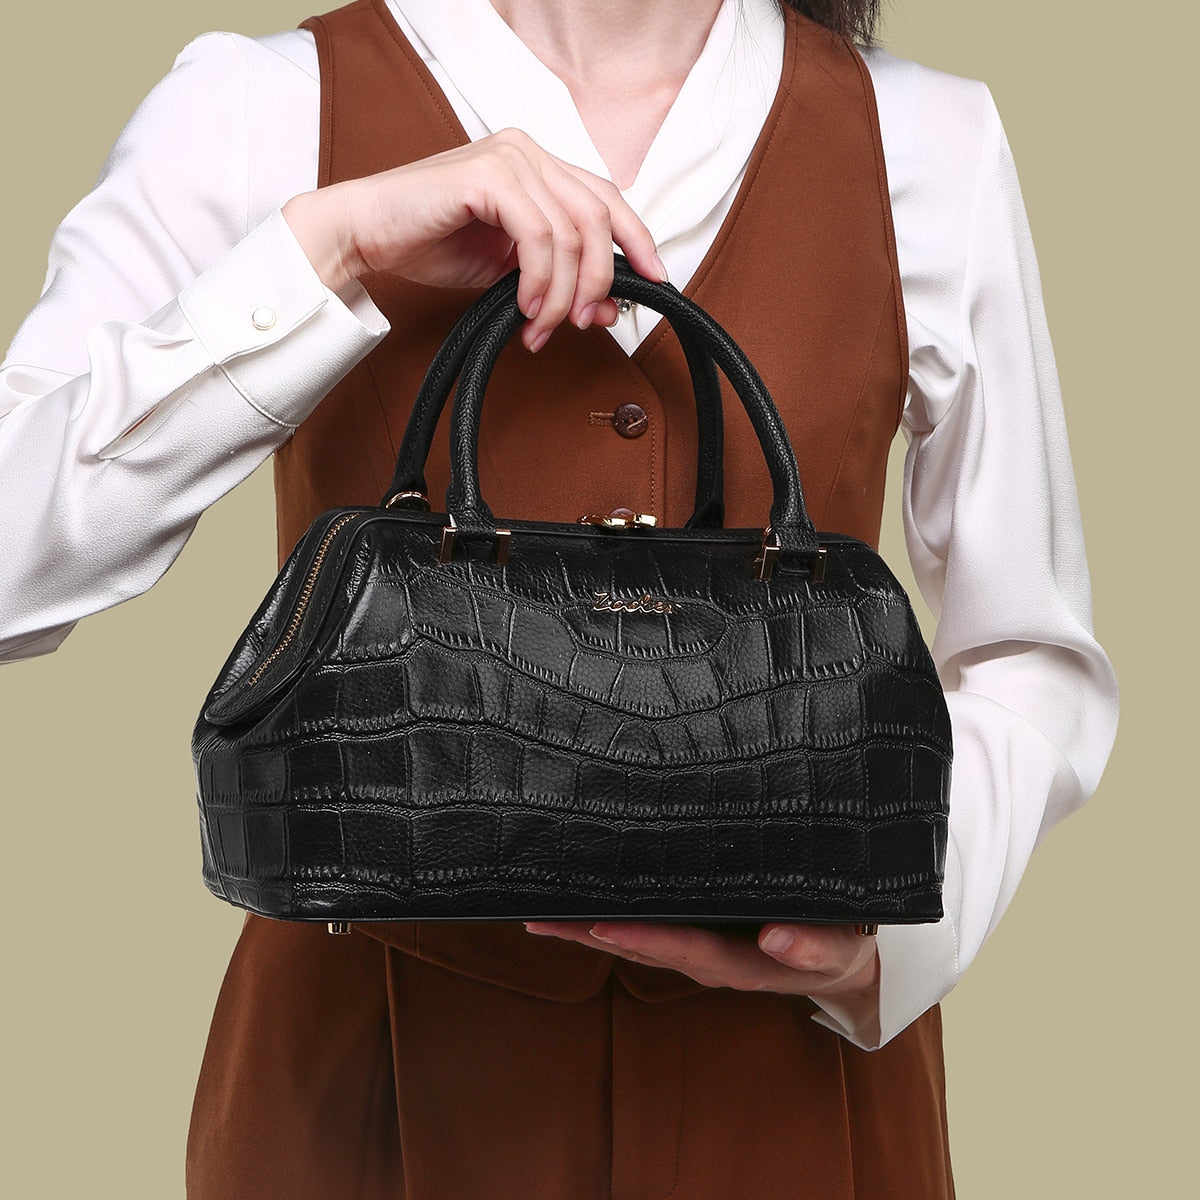 ZOOLER Full Skin 100% Cow Leather Original Bag Single Shoulder Women Handbag Fashionable Exquisite Leather Purses Top #yc256